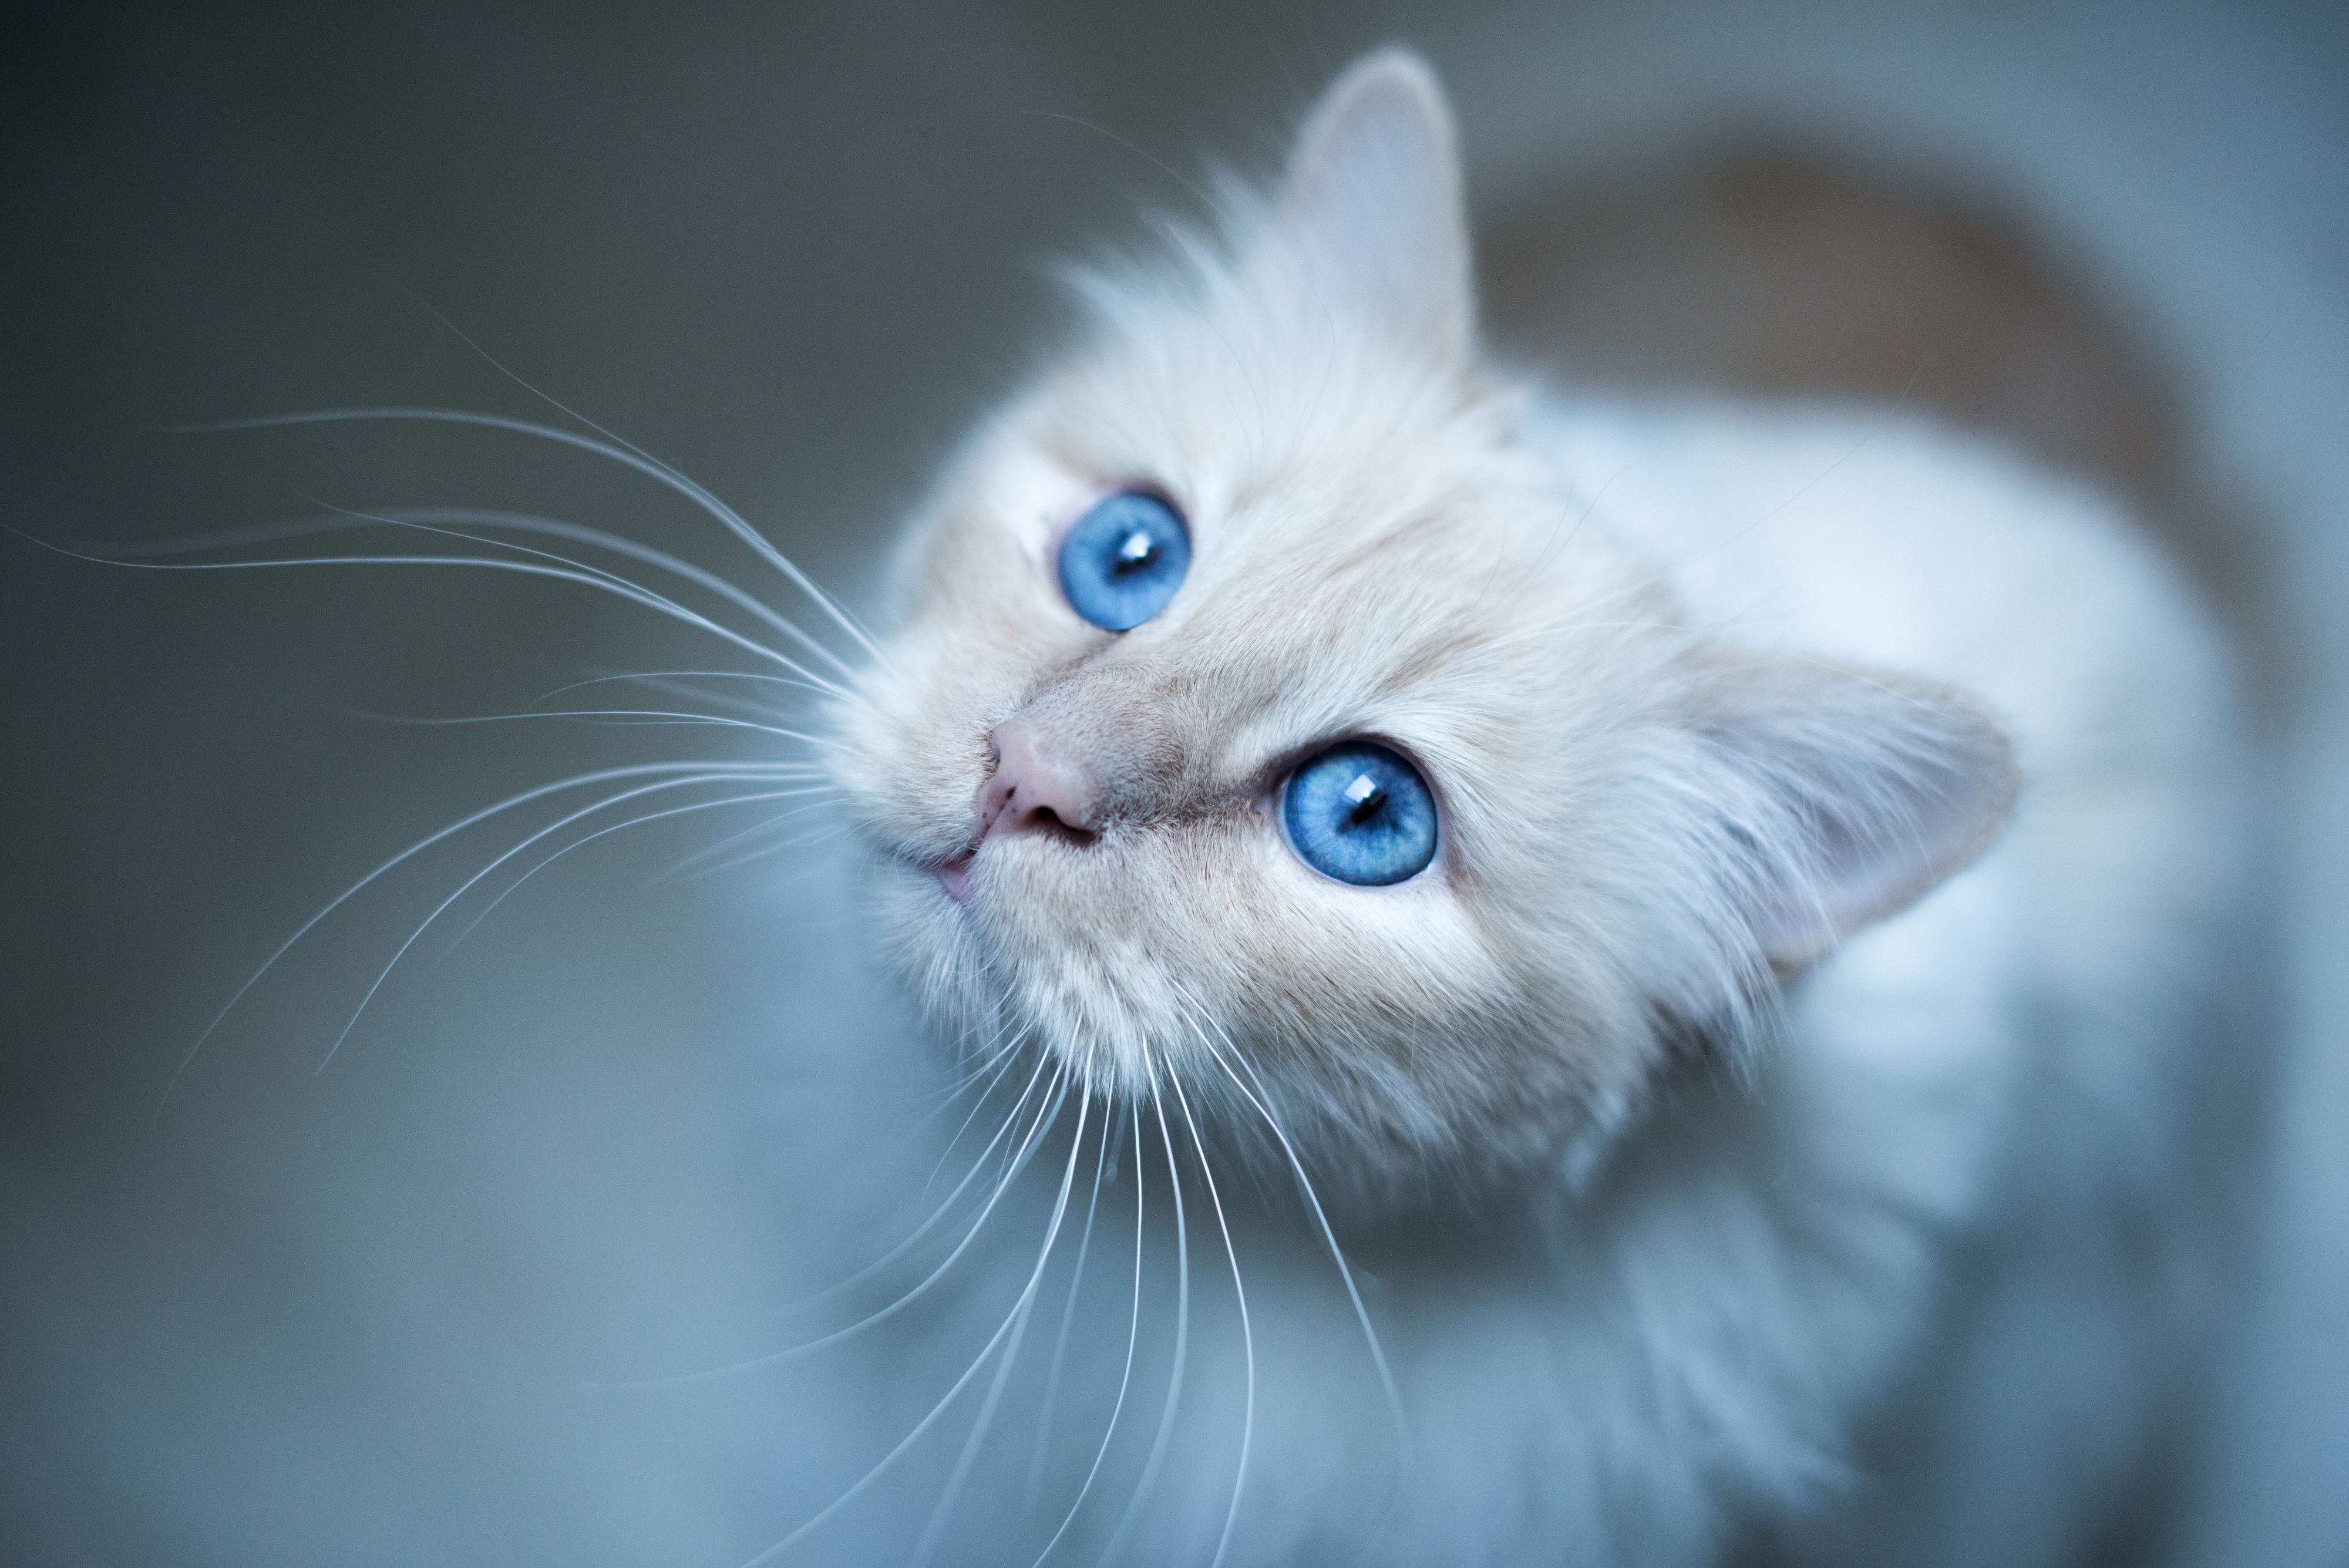 120154 descargar imagen animales, gato, bozal, ojos azules, de ojos azules, gato birmano: fondos de pantalla y protectores de pantalla gratis